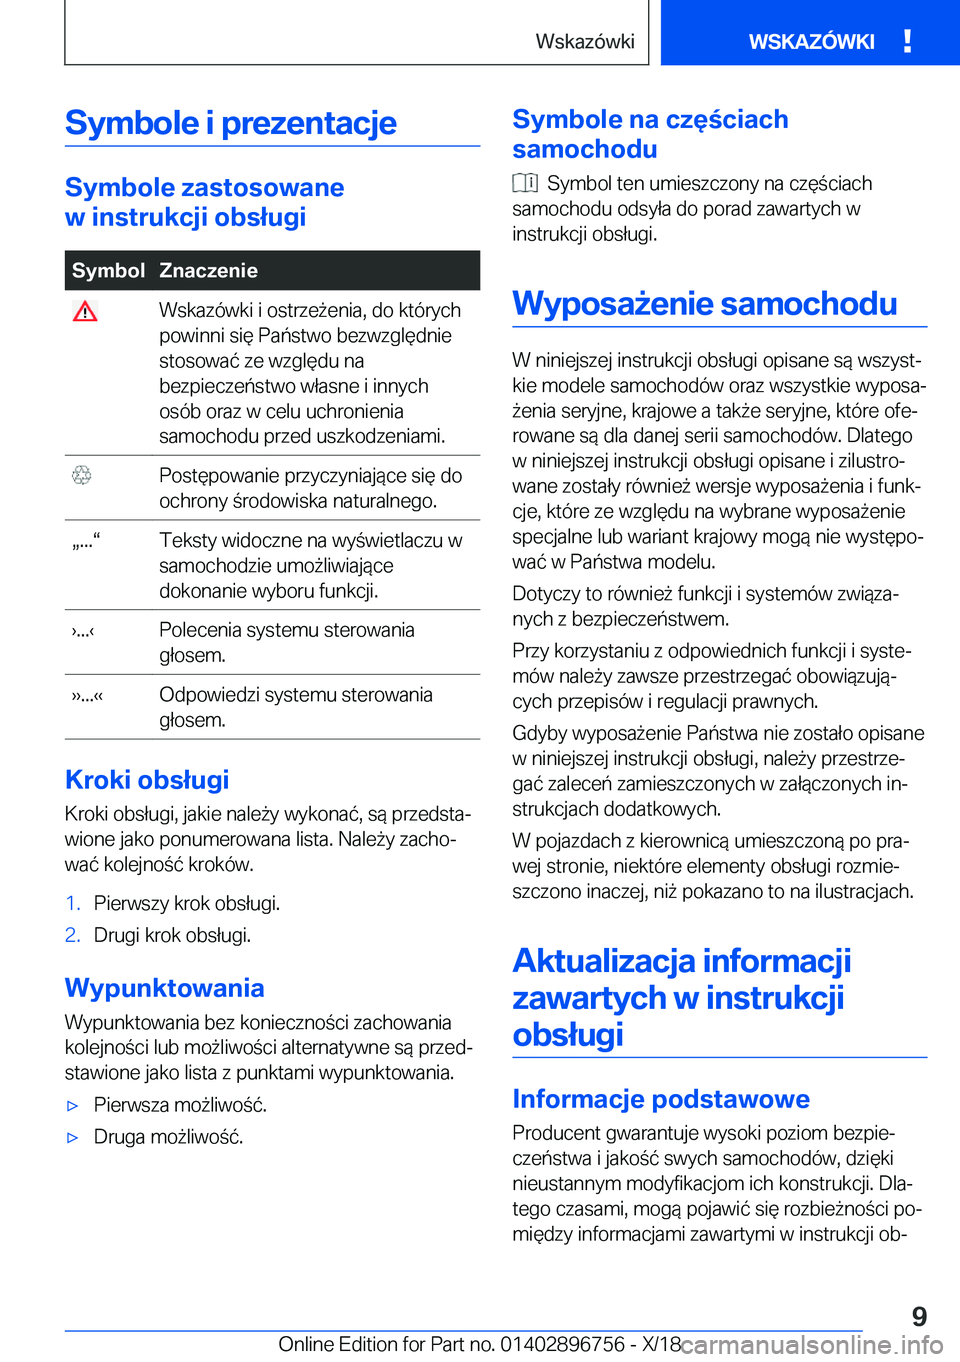 BMW X5 2019  Instrukcja obsługi (in Polish) �S�y�m�b�o�l�e��i��p�r�e�z�e�n�t�a�c�j�e
�S�y�m�b�o�l�e��z�a�s�t�o�s�o�w�a�n�e
�w��i�n�s�t�r�u�k�c�j�i��o�b�s�ł�u�g�i
�S�y�m�b�o�l�Z�n�a�c�z�e�n�i�e��W�s�k�a�z�